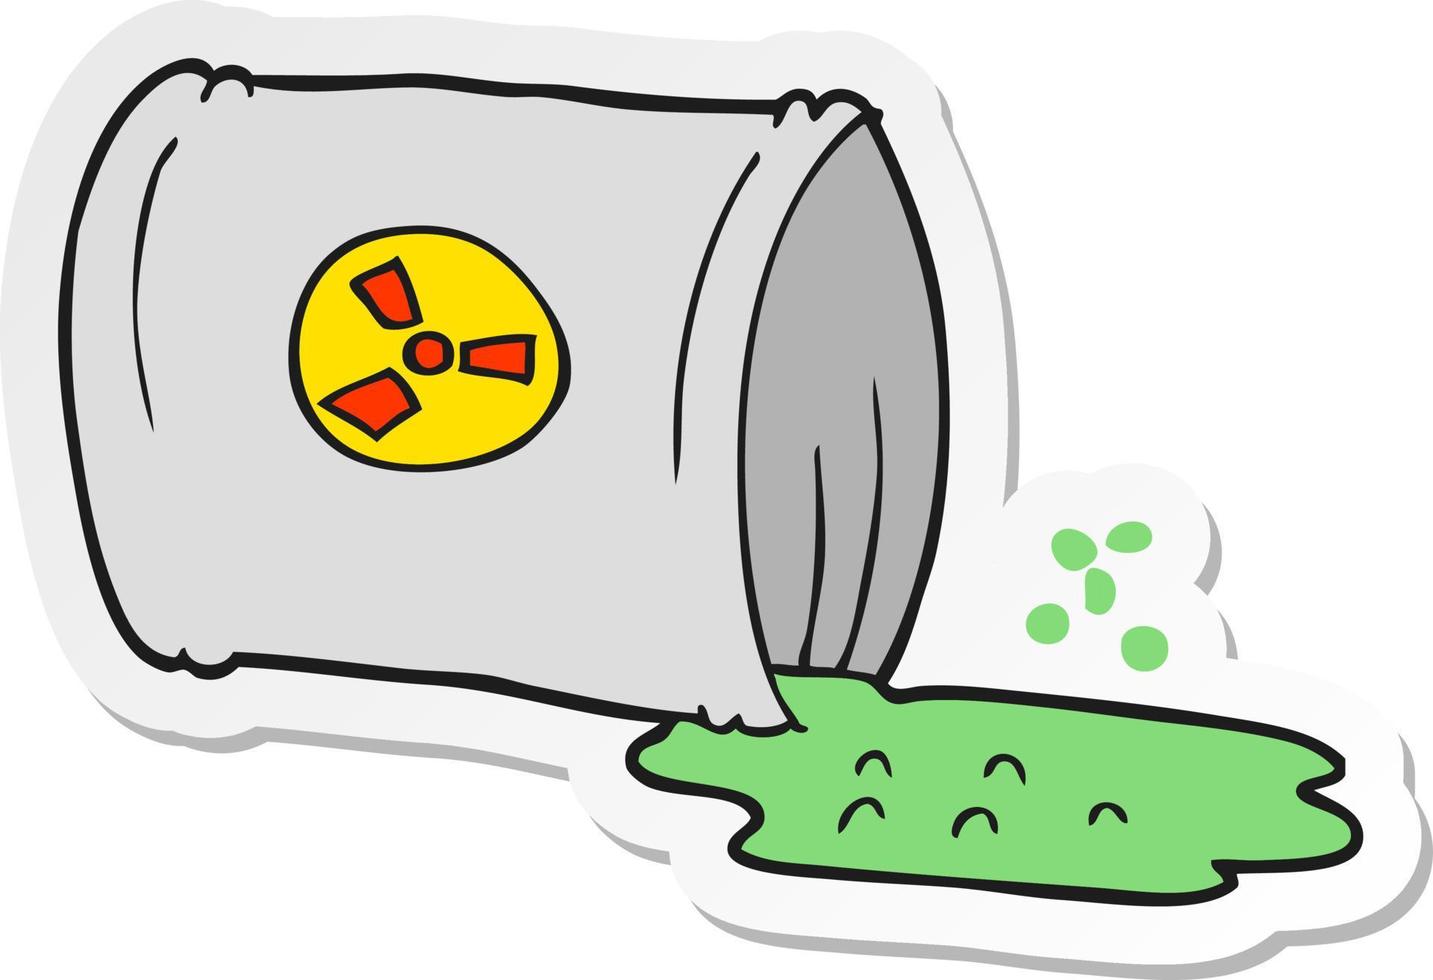 sticker of a cartoon nuclear waste vector